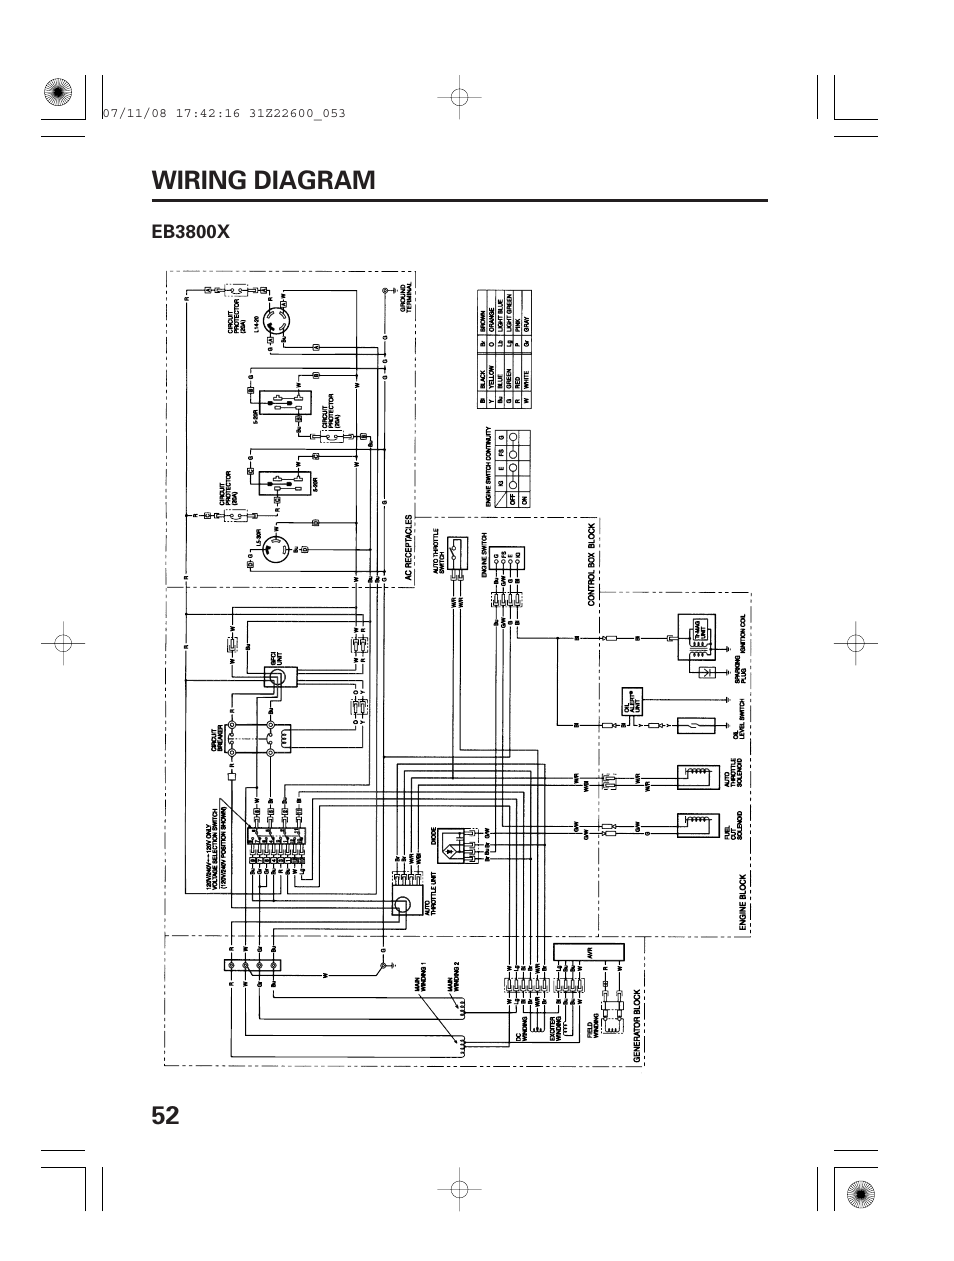 Wiring diagram, Eb3800x, 52 wiring diagram | HONDA EB5000X User Manual